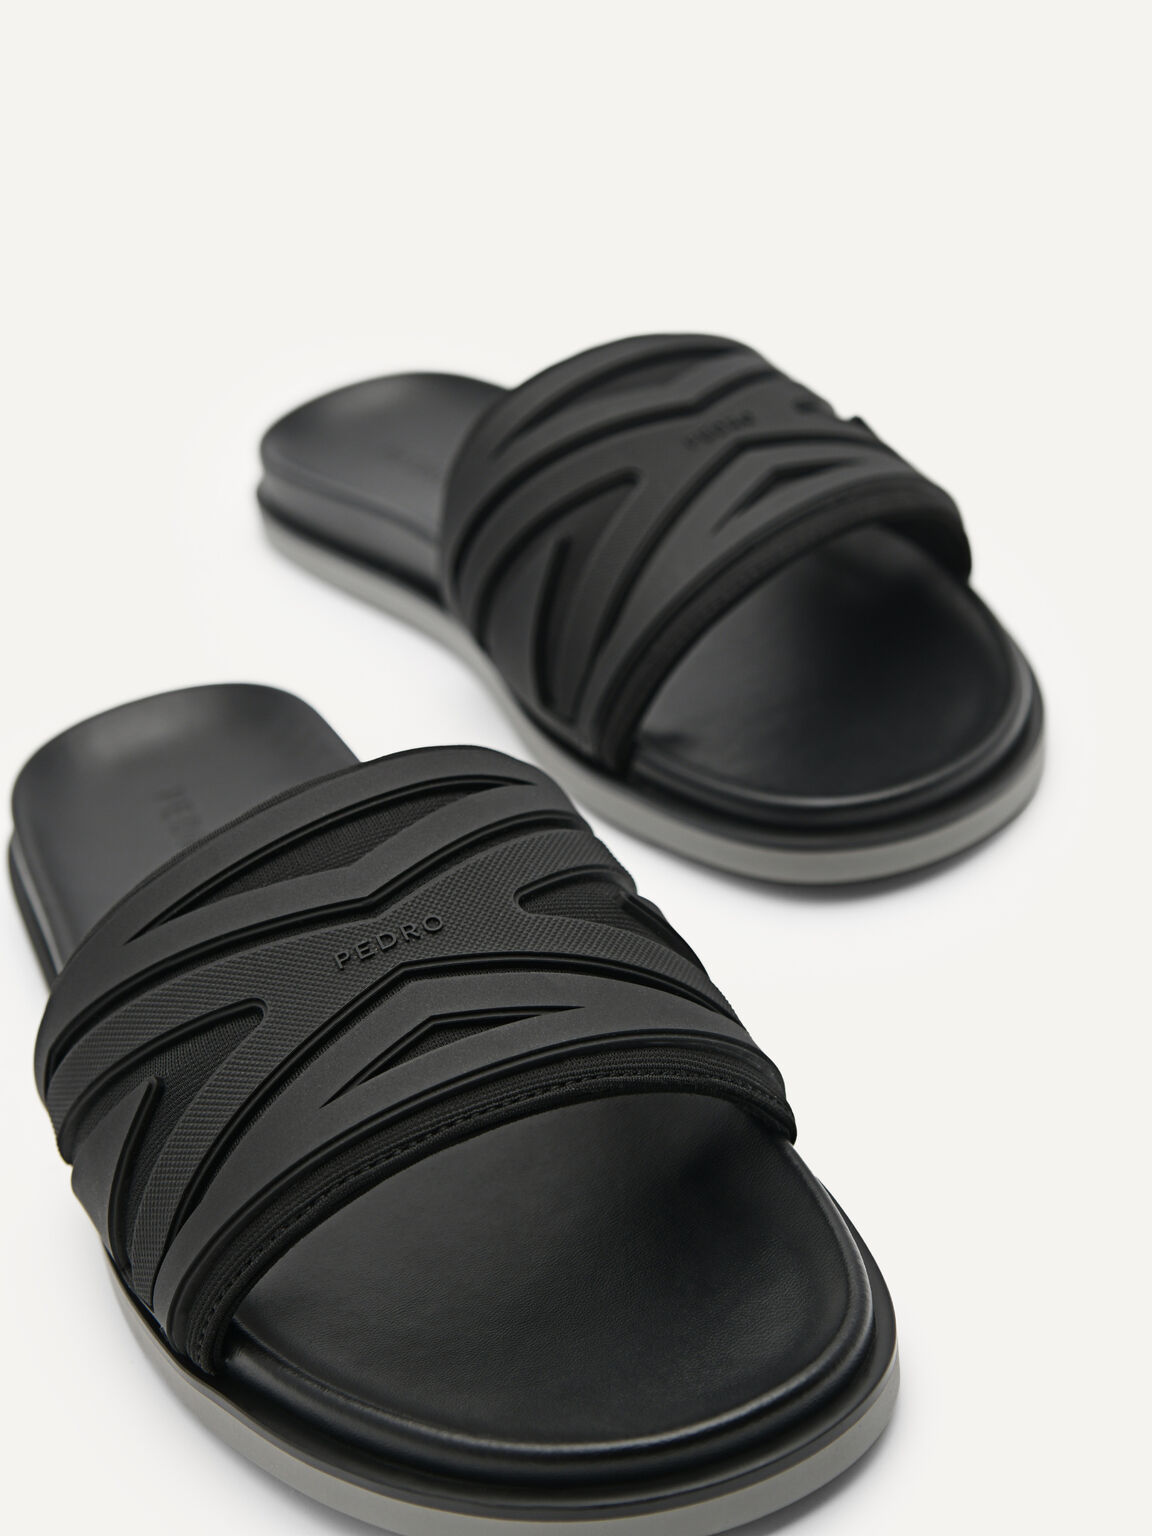 Nova Slide Sandals, Black